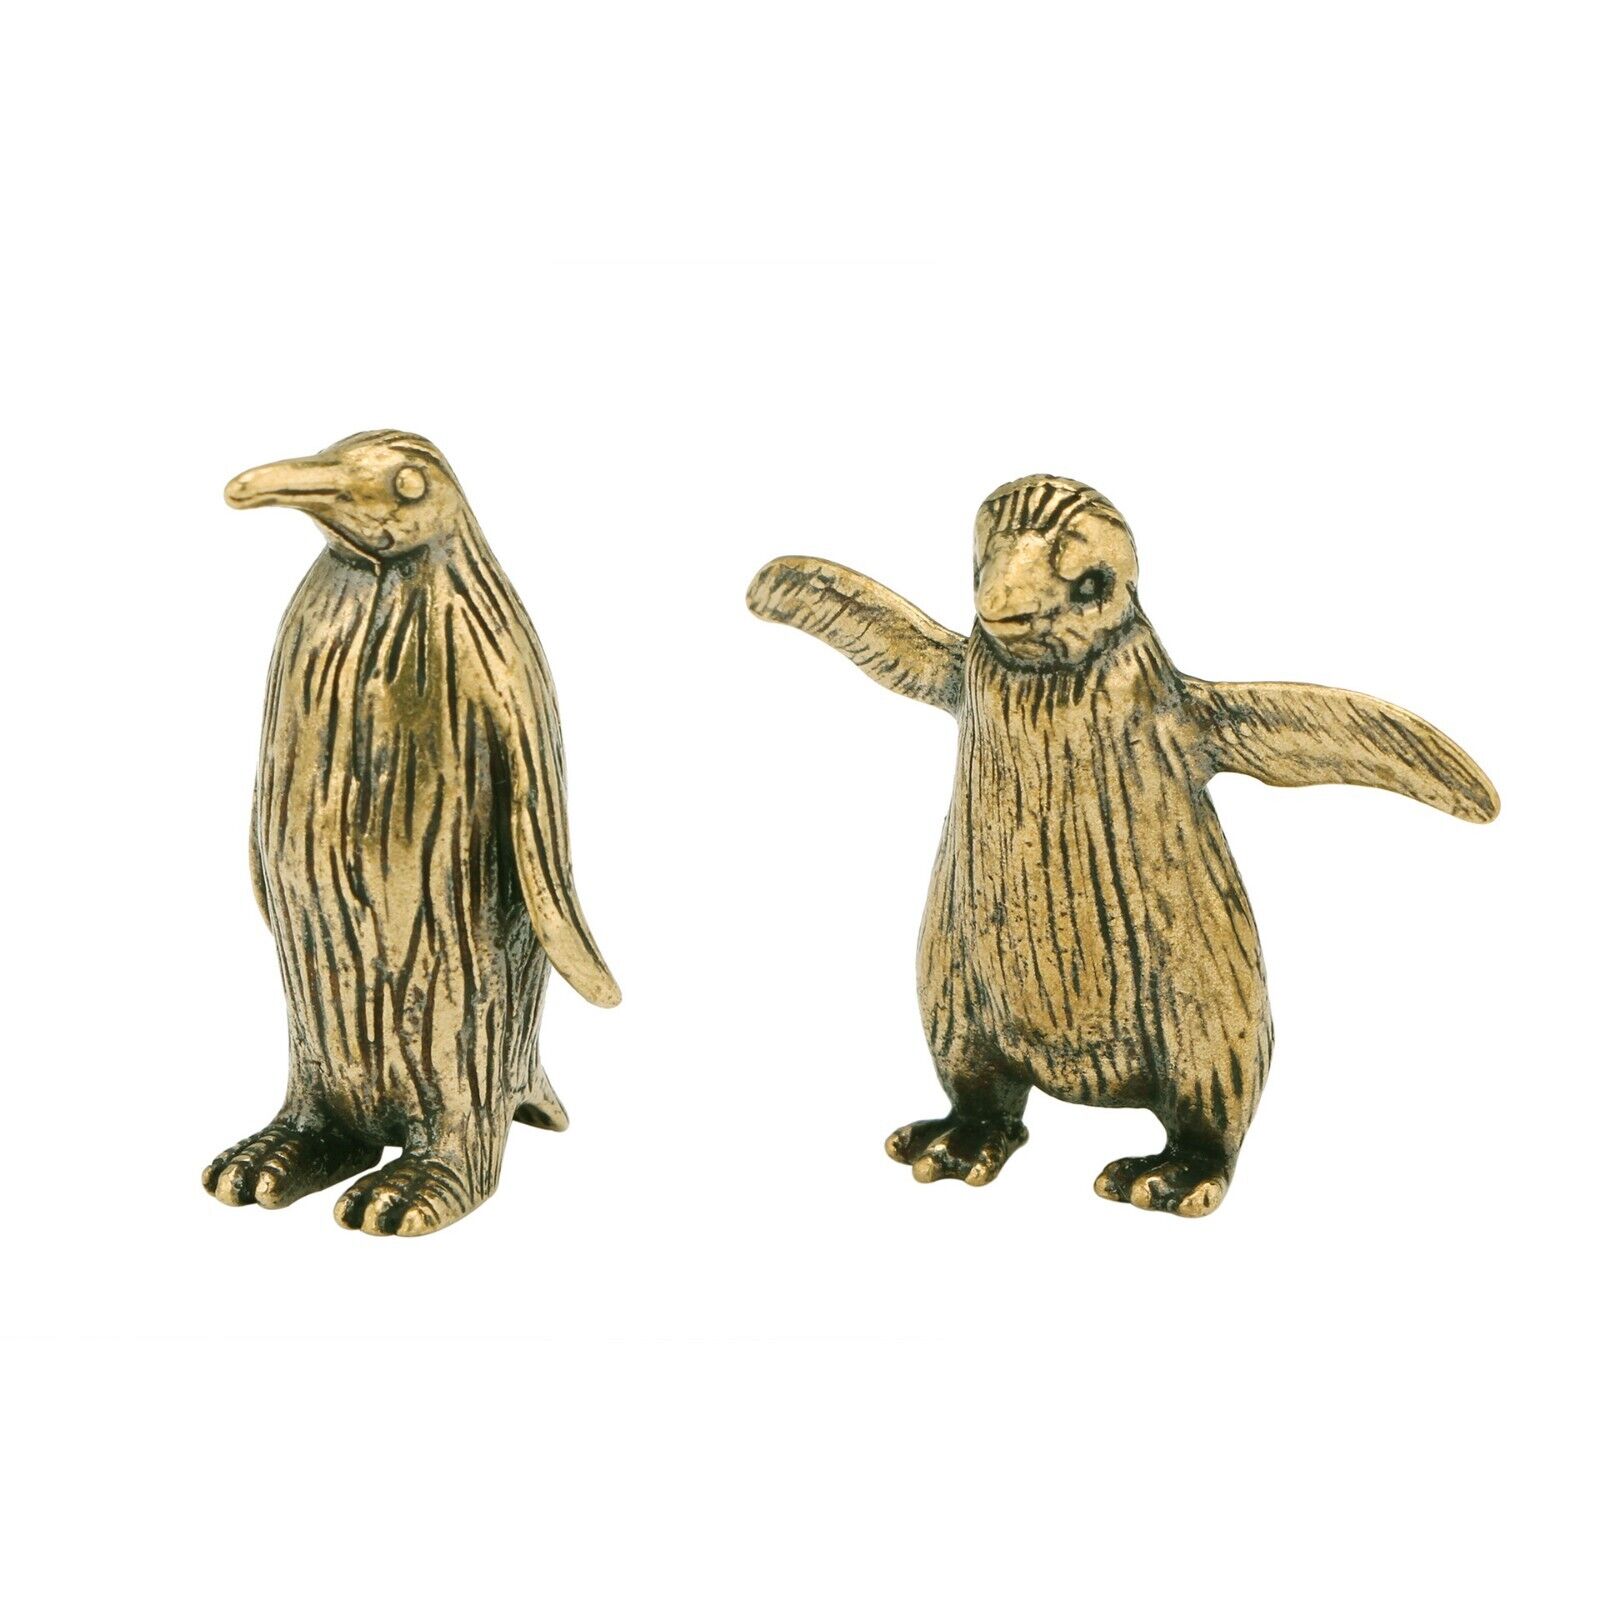 Handmade pure copper penguin antique decorative handicraft collection ornaments